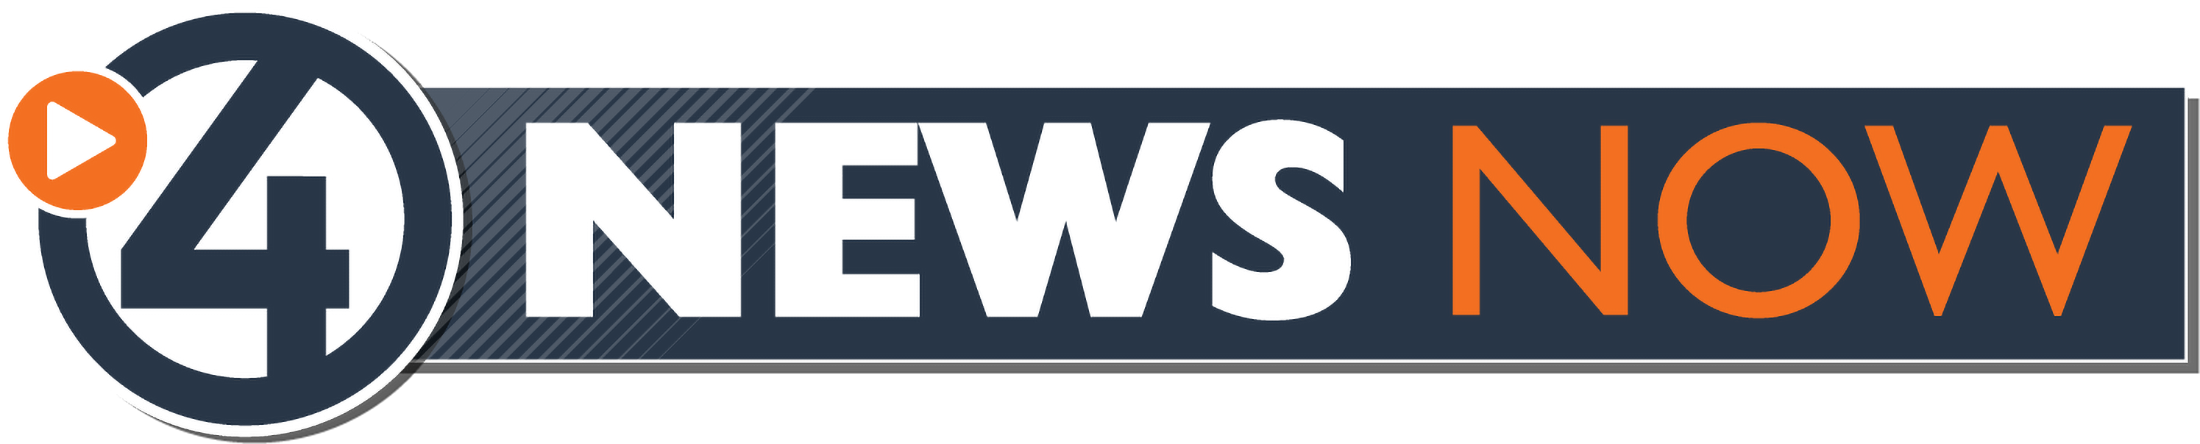 4 News Now logo